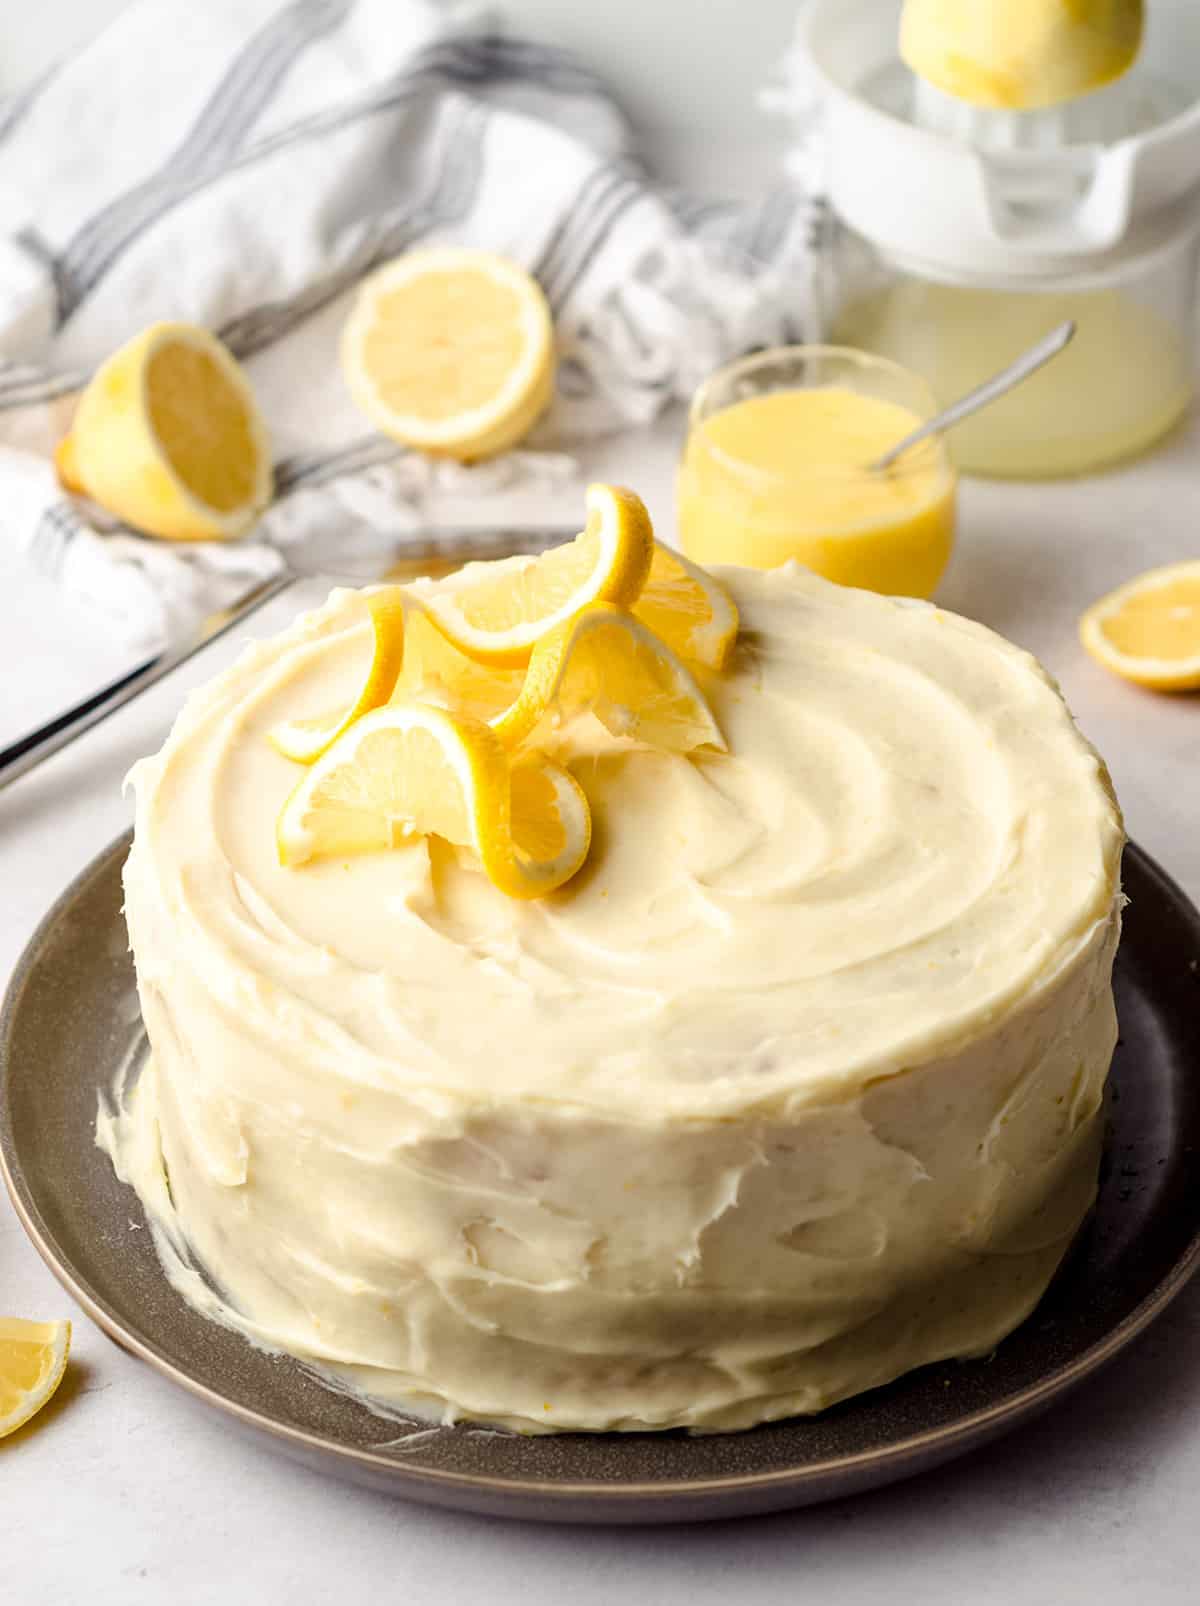 A lemon cake decorated with lemon slices.